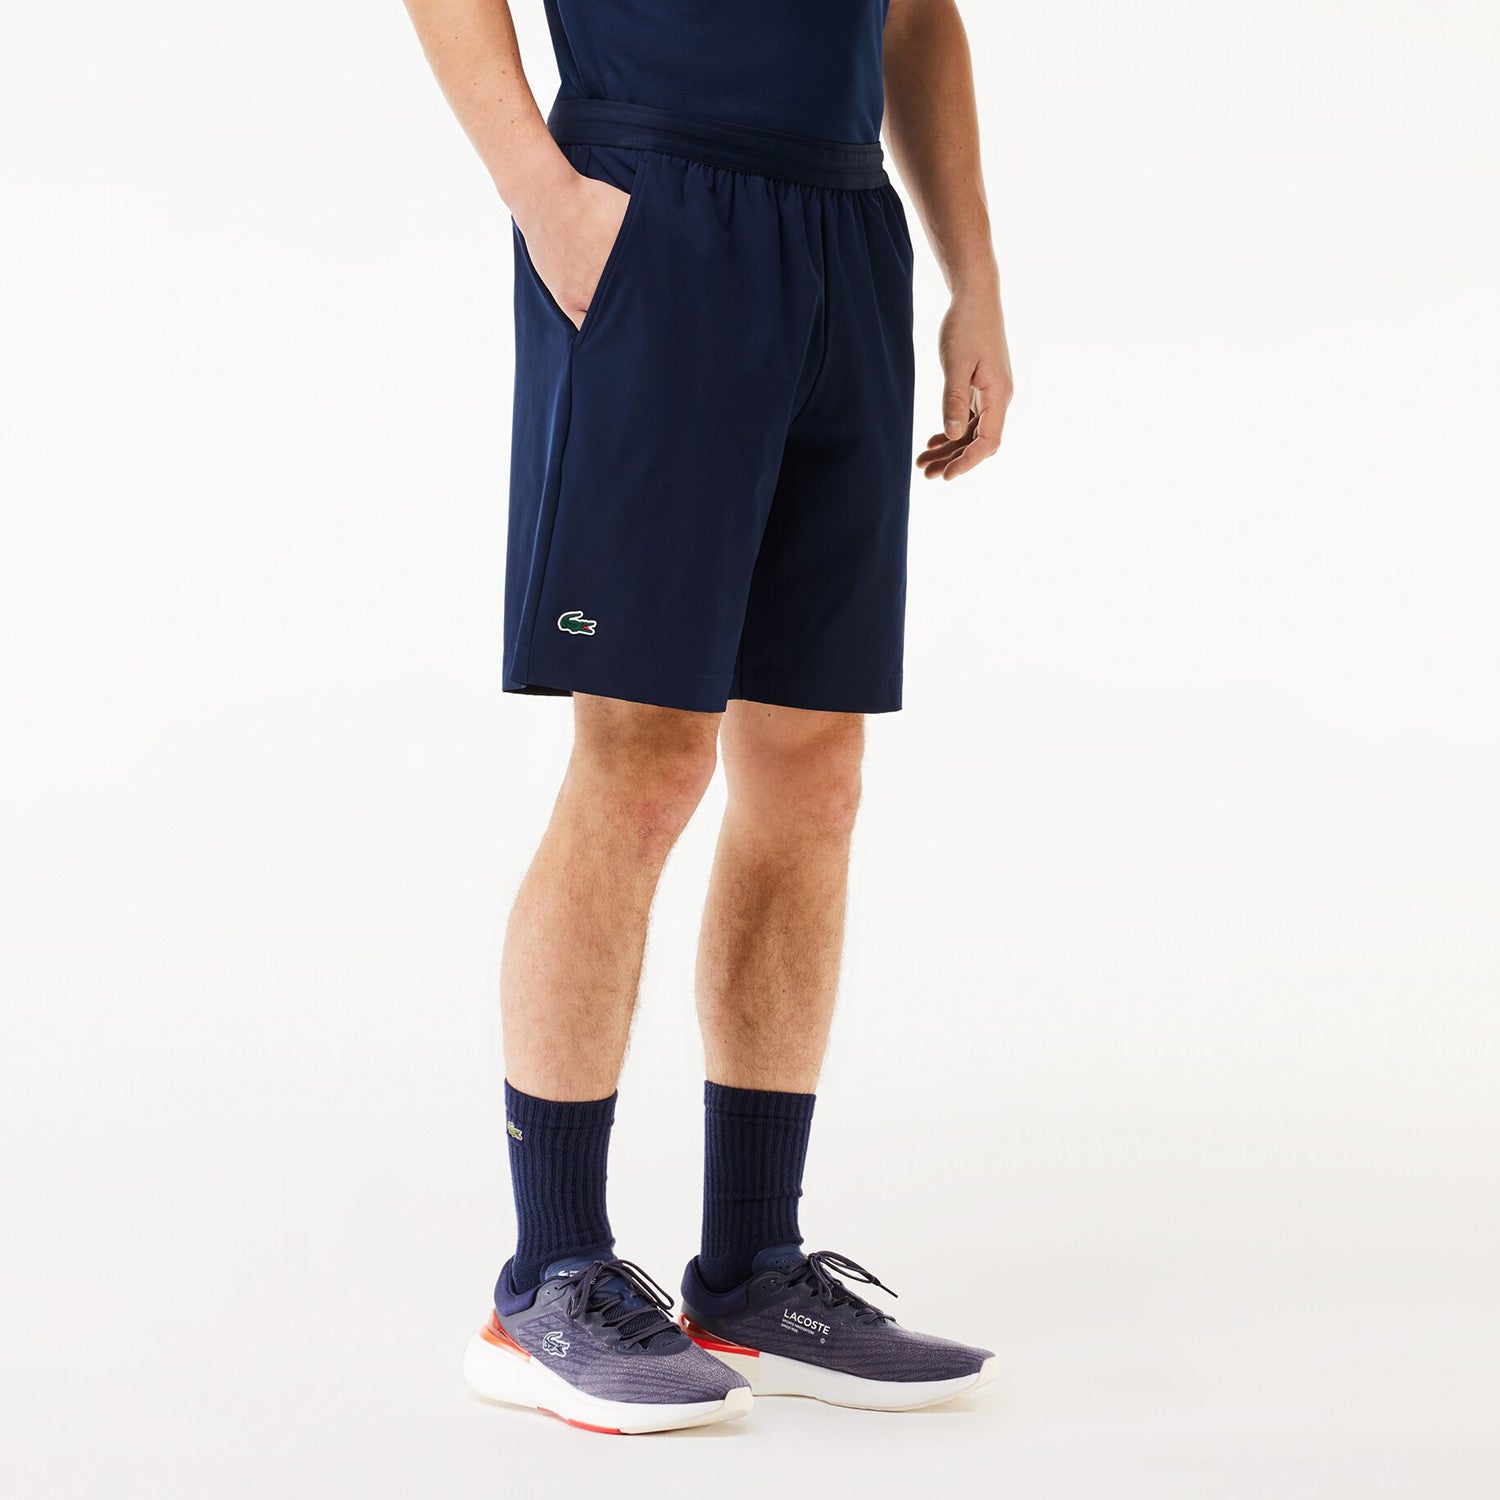 Lacoste Men's Technical Woven Tennis Shorts - Dark Blue (1)